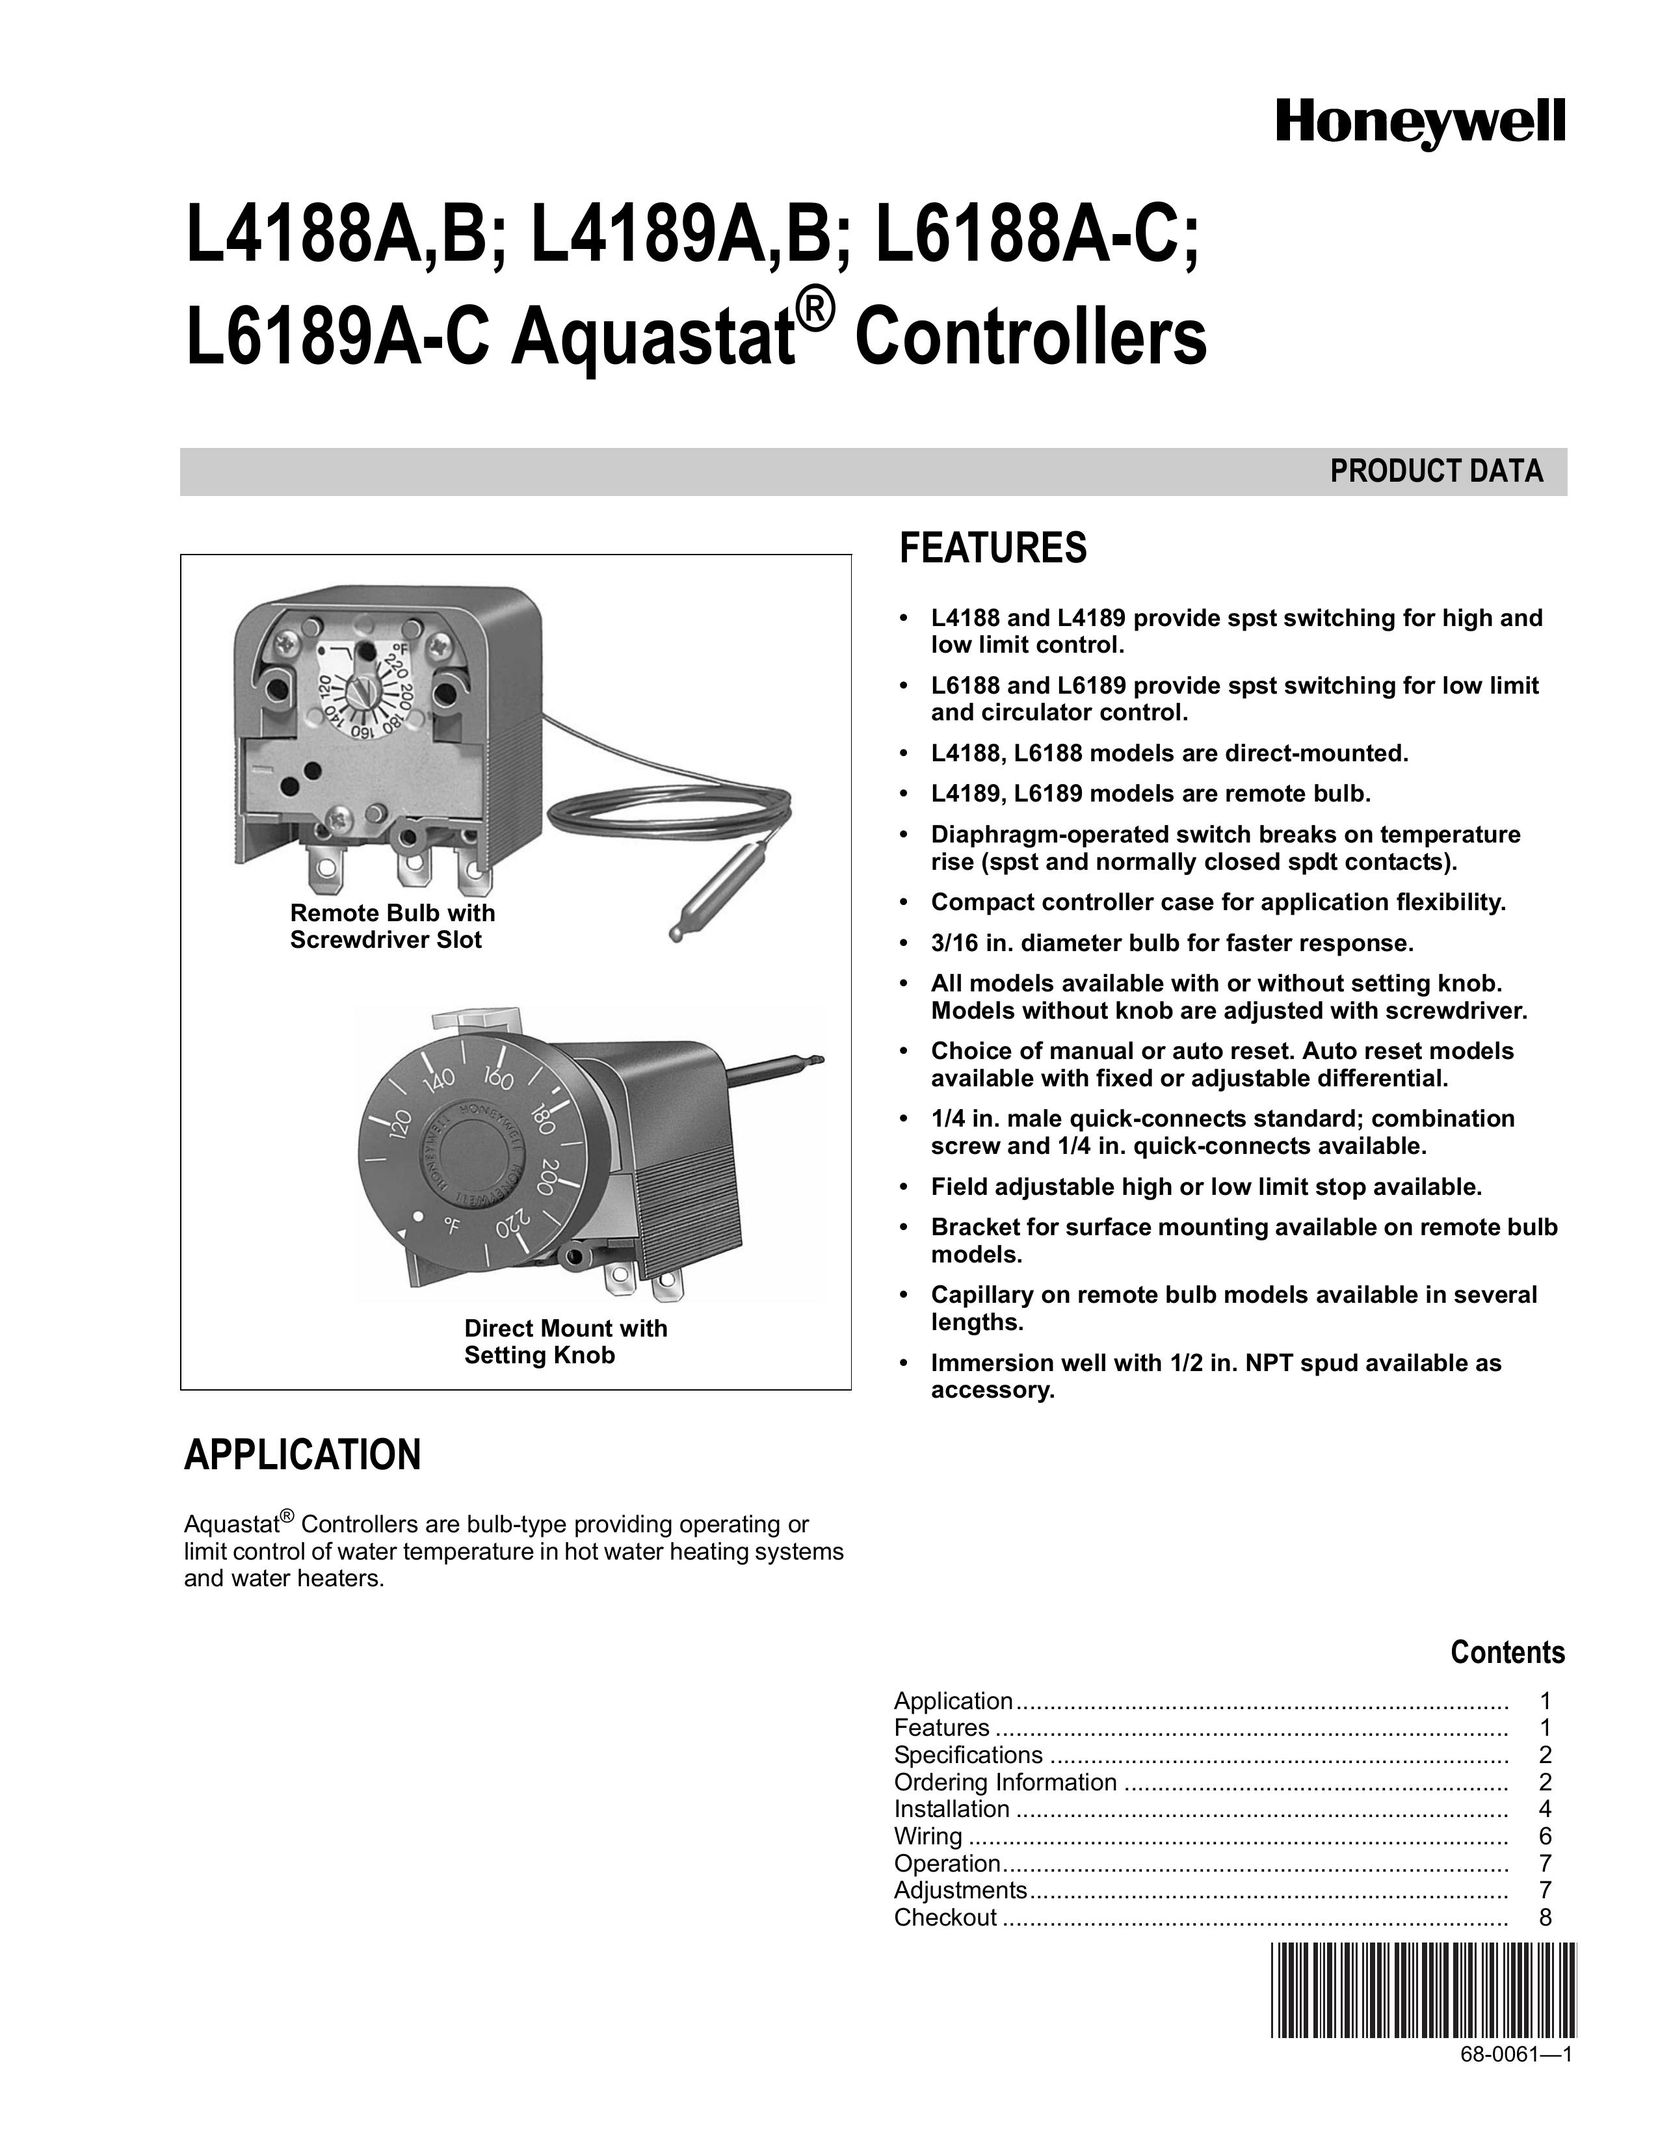 Honeywell L4188A Water Heater User Manual